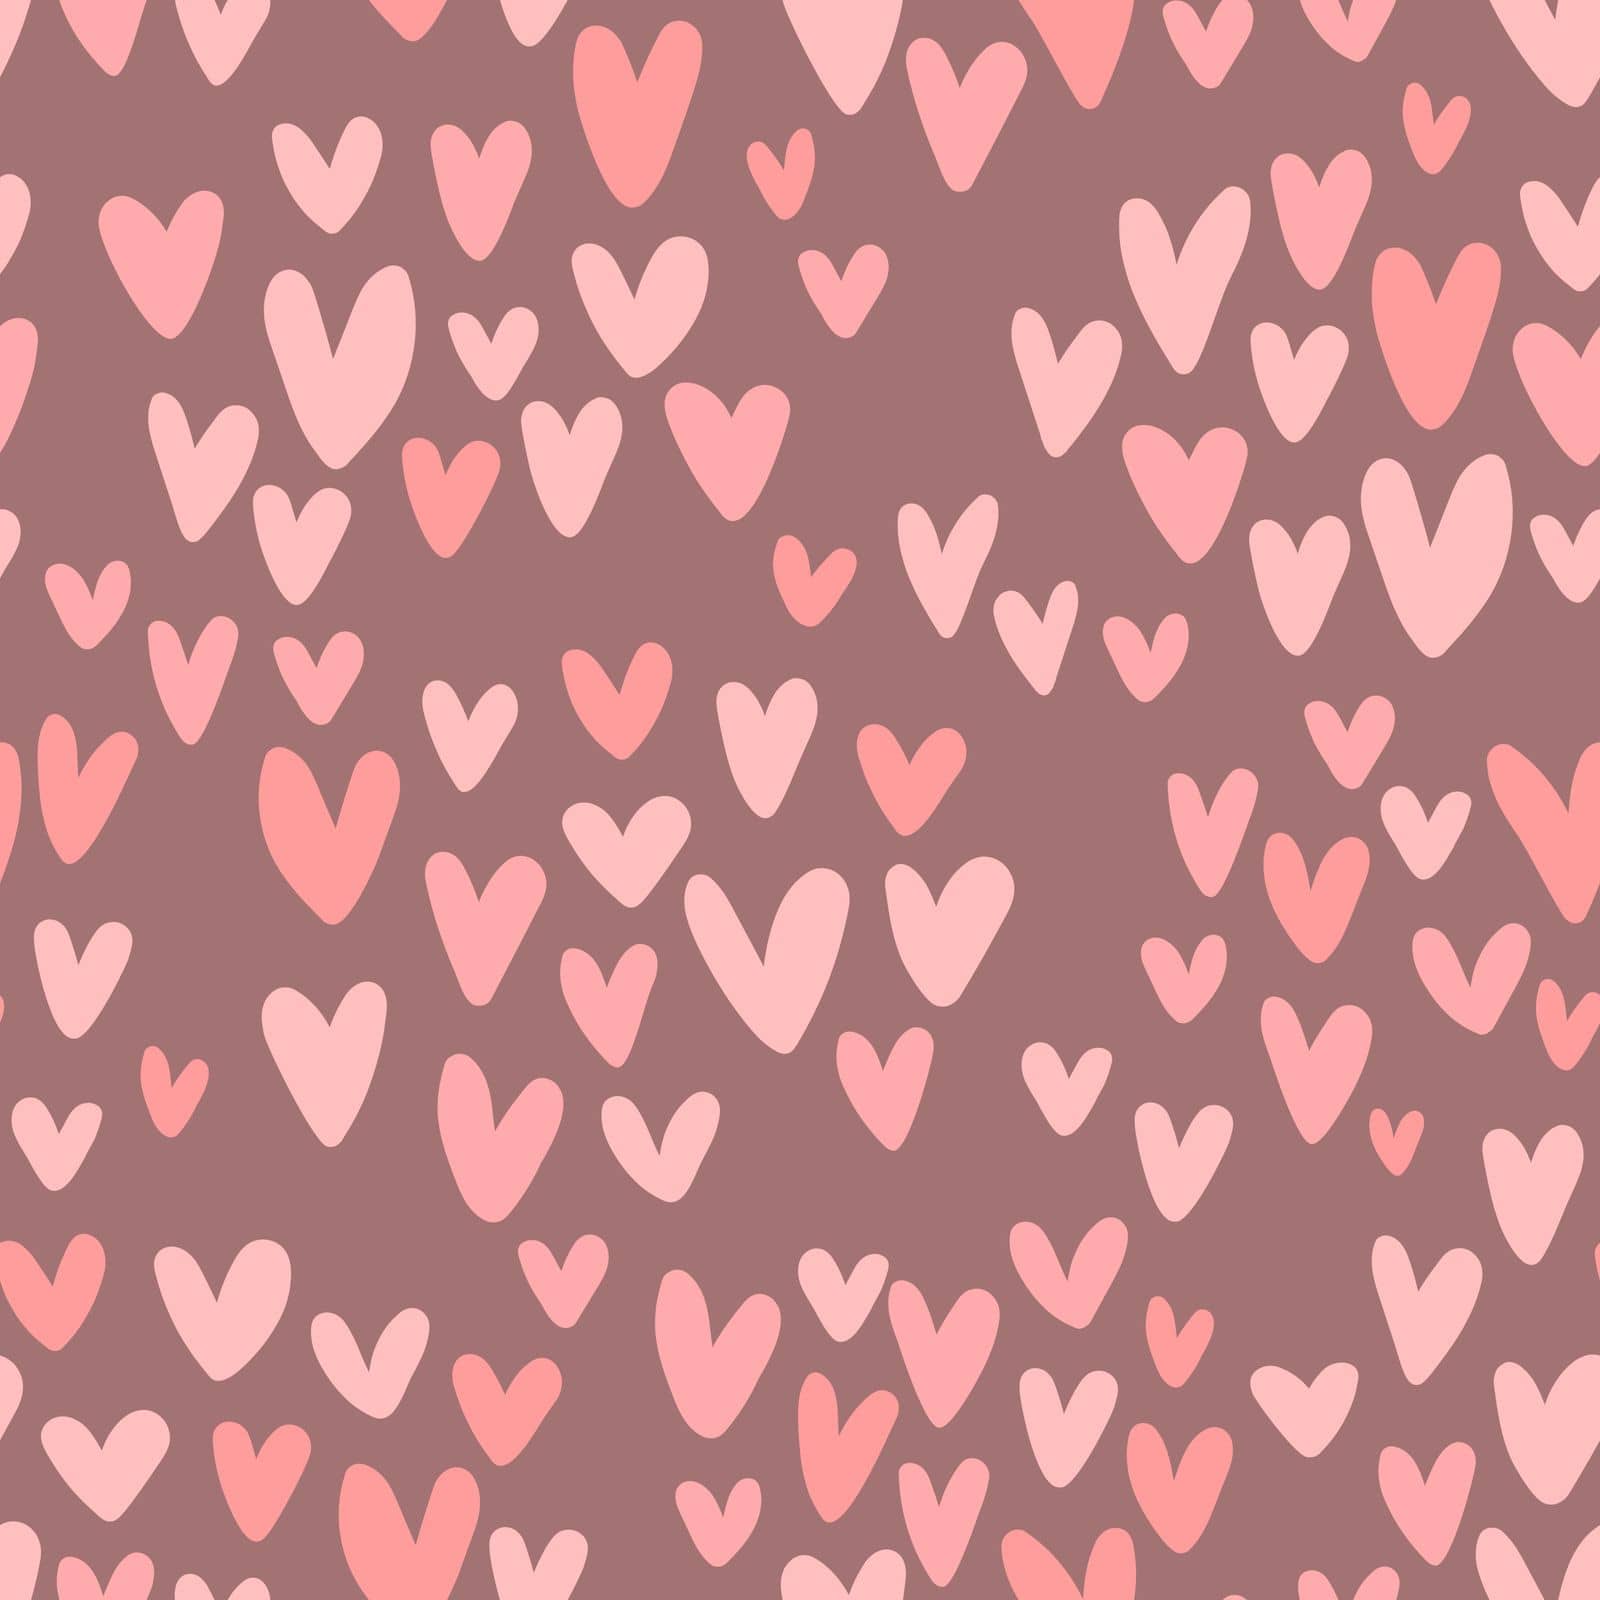 Heart marker drawn seamless vector pattern. Valentine's day handwritten background. Endless romantic print. Cute seamless pattern.